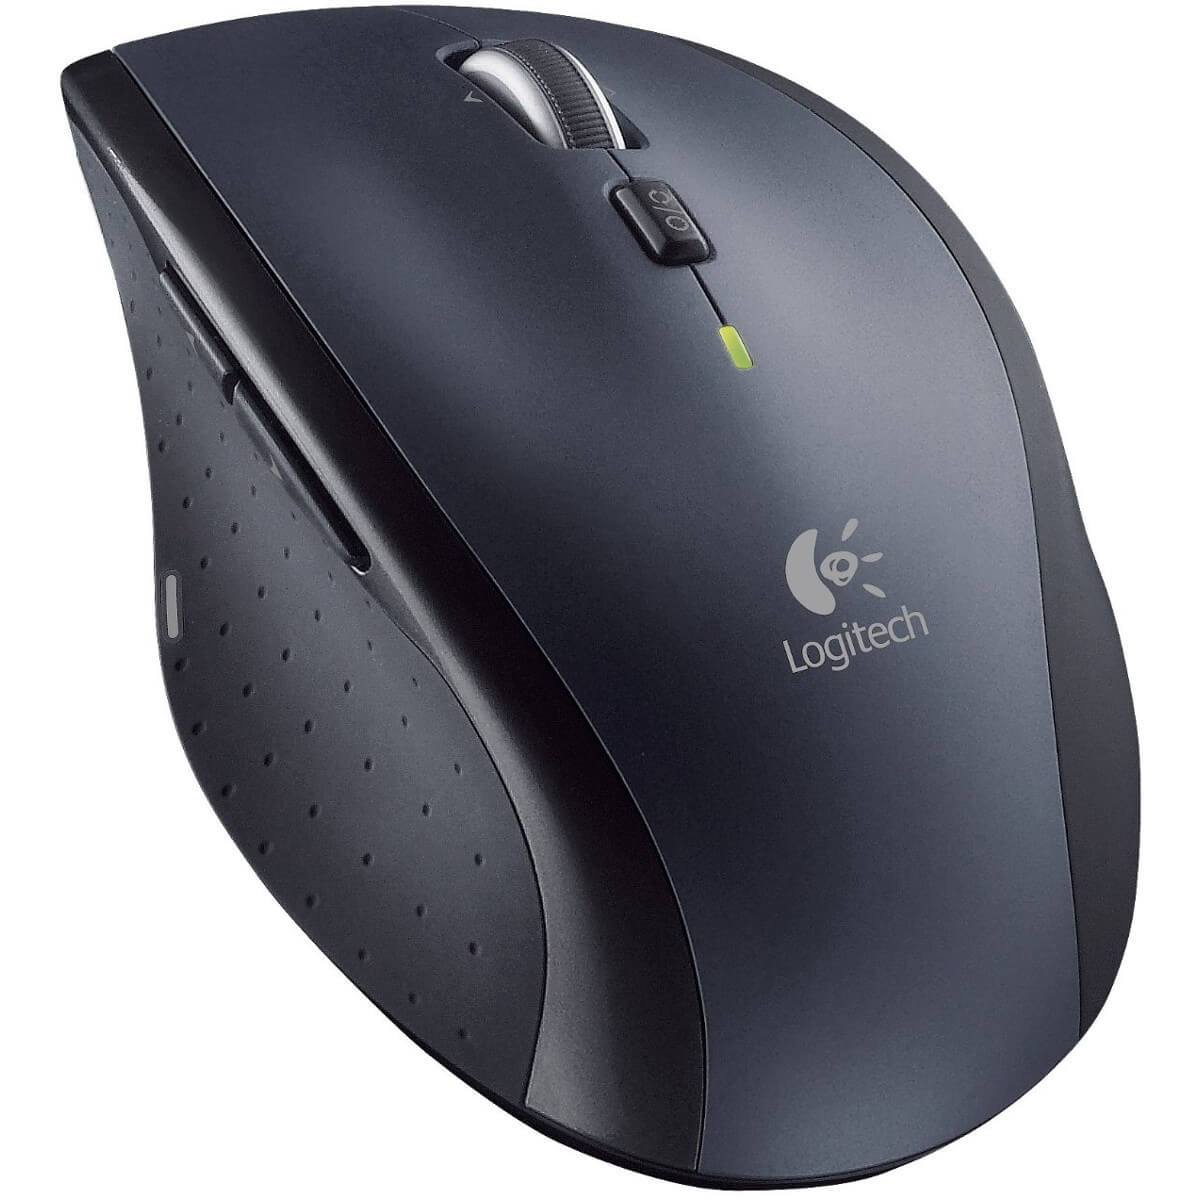  Mouse wireless Logitech M705 Gri 